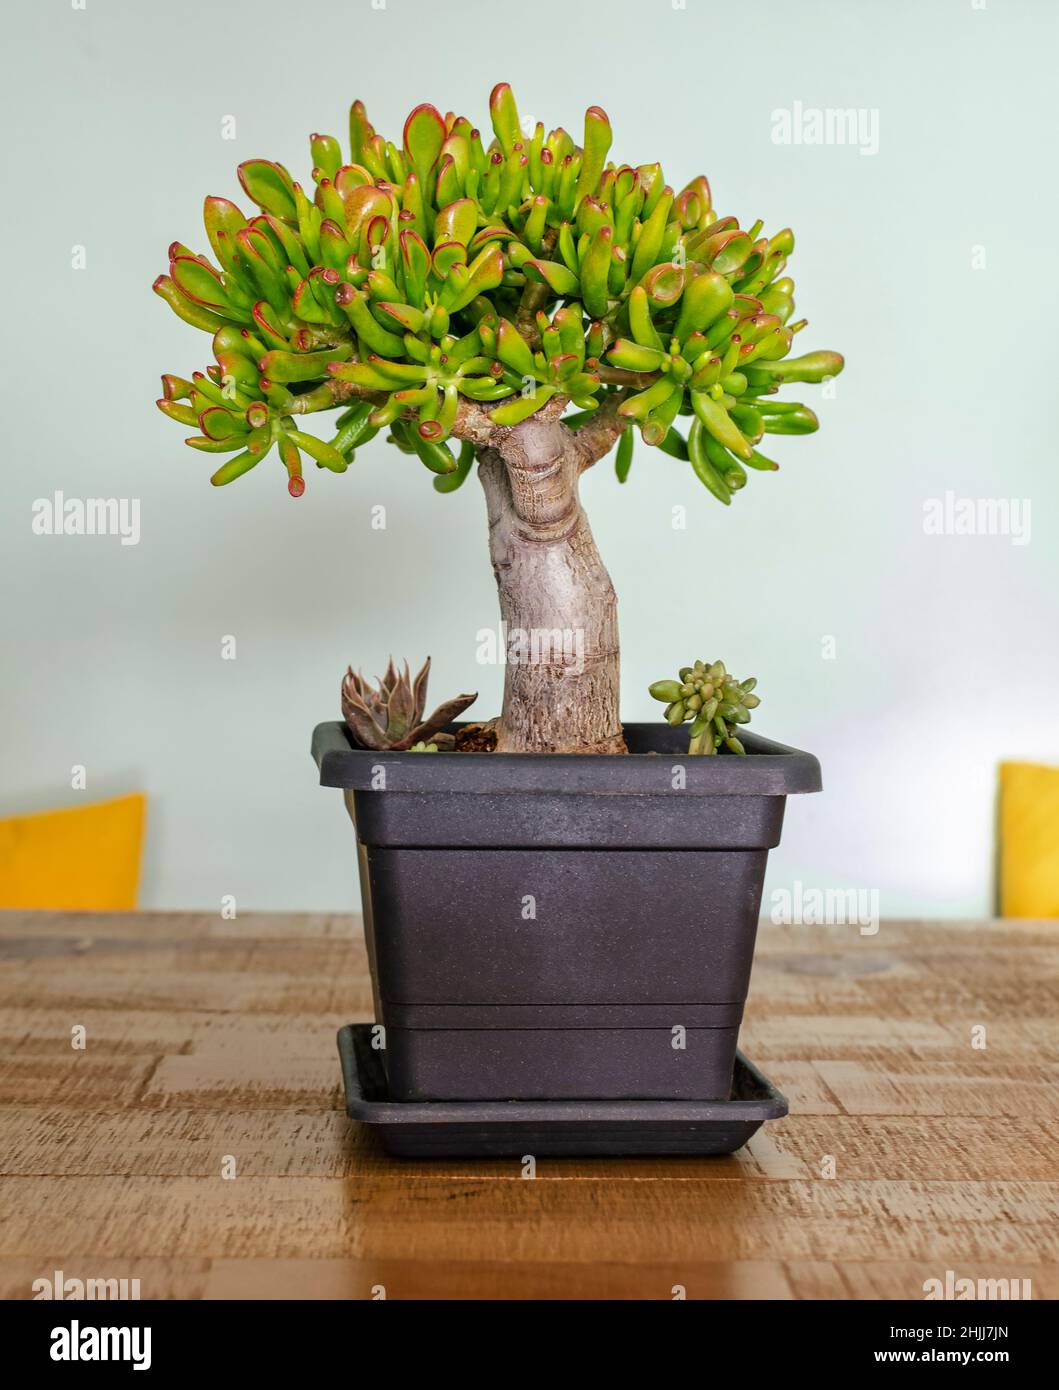 Succulent plant called Crassula ovata gollum or hobbit in a pot. Stock Photo